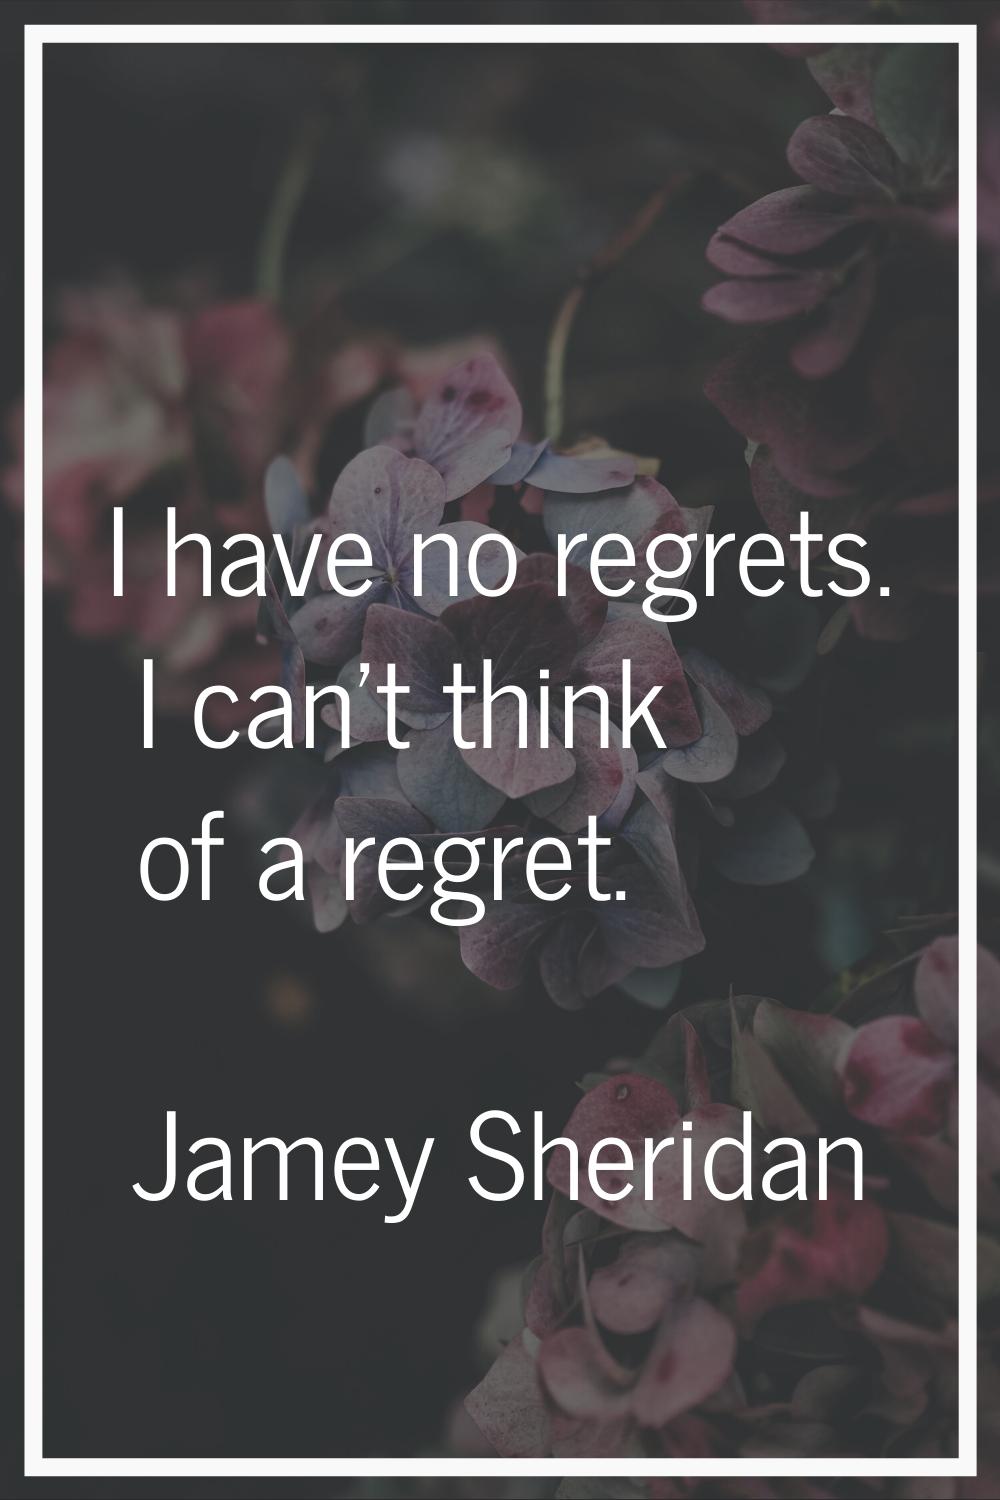 I have no regrets. I can't think of a regret.